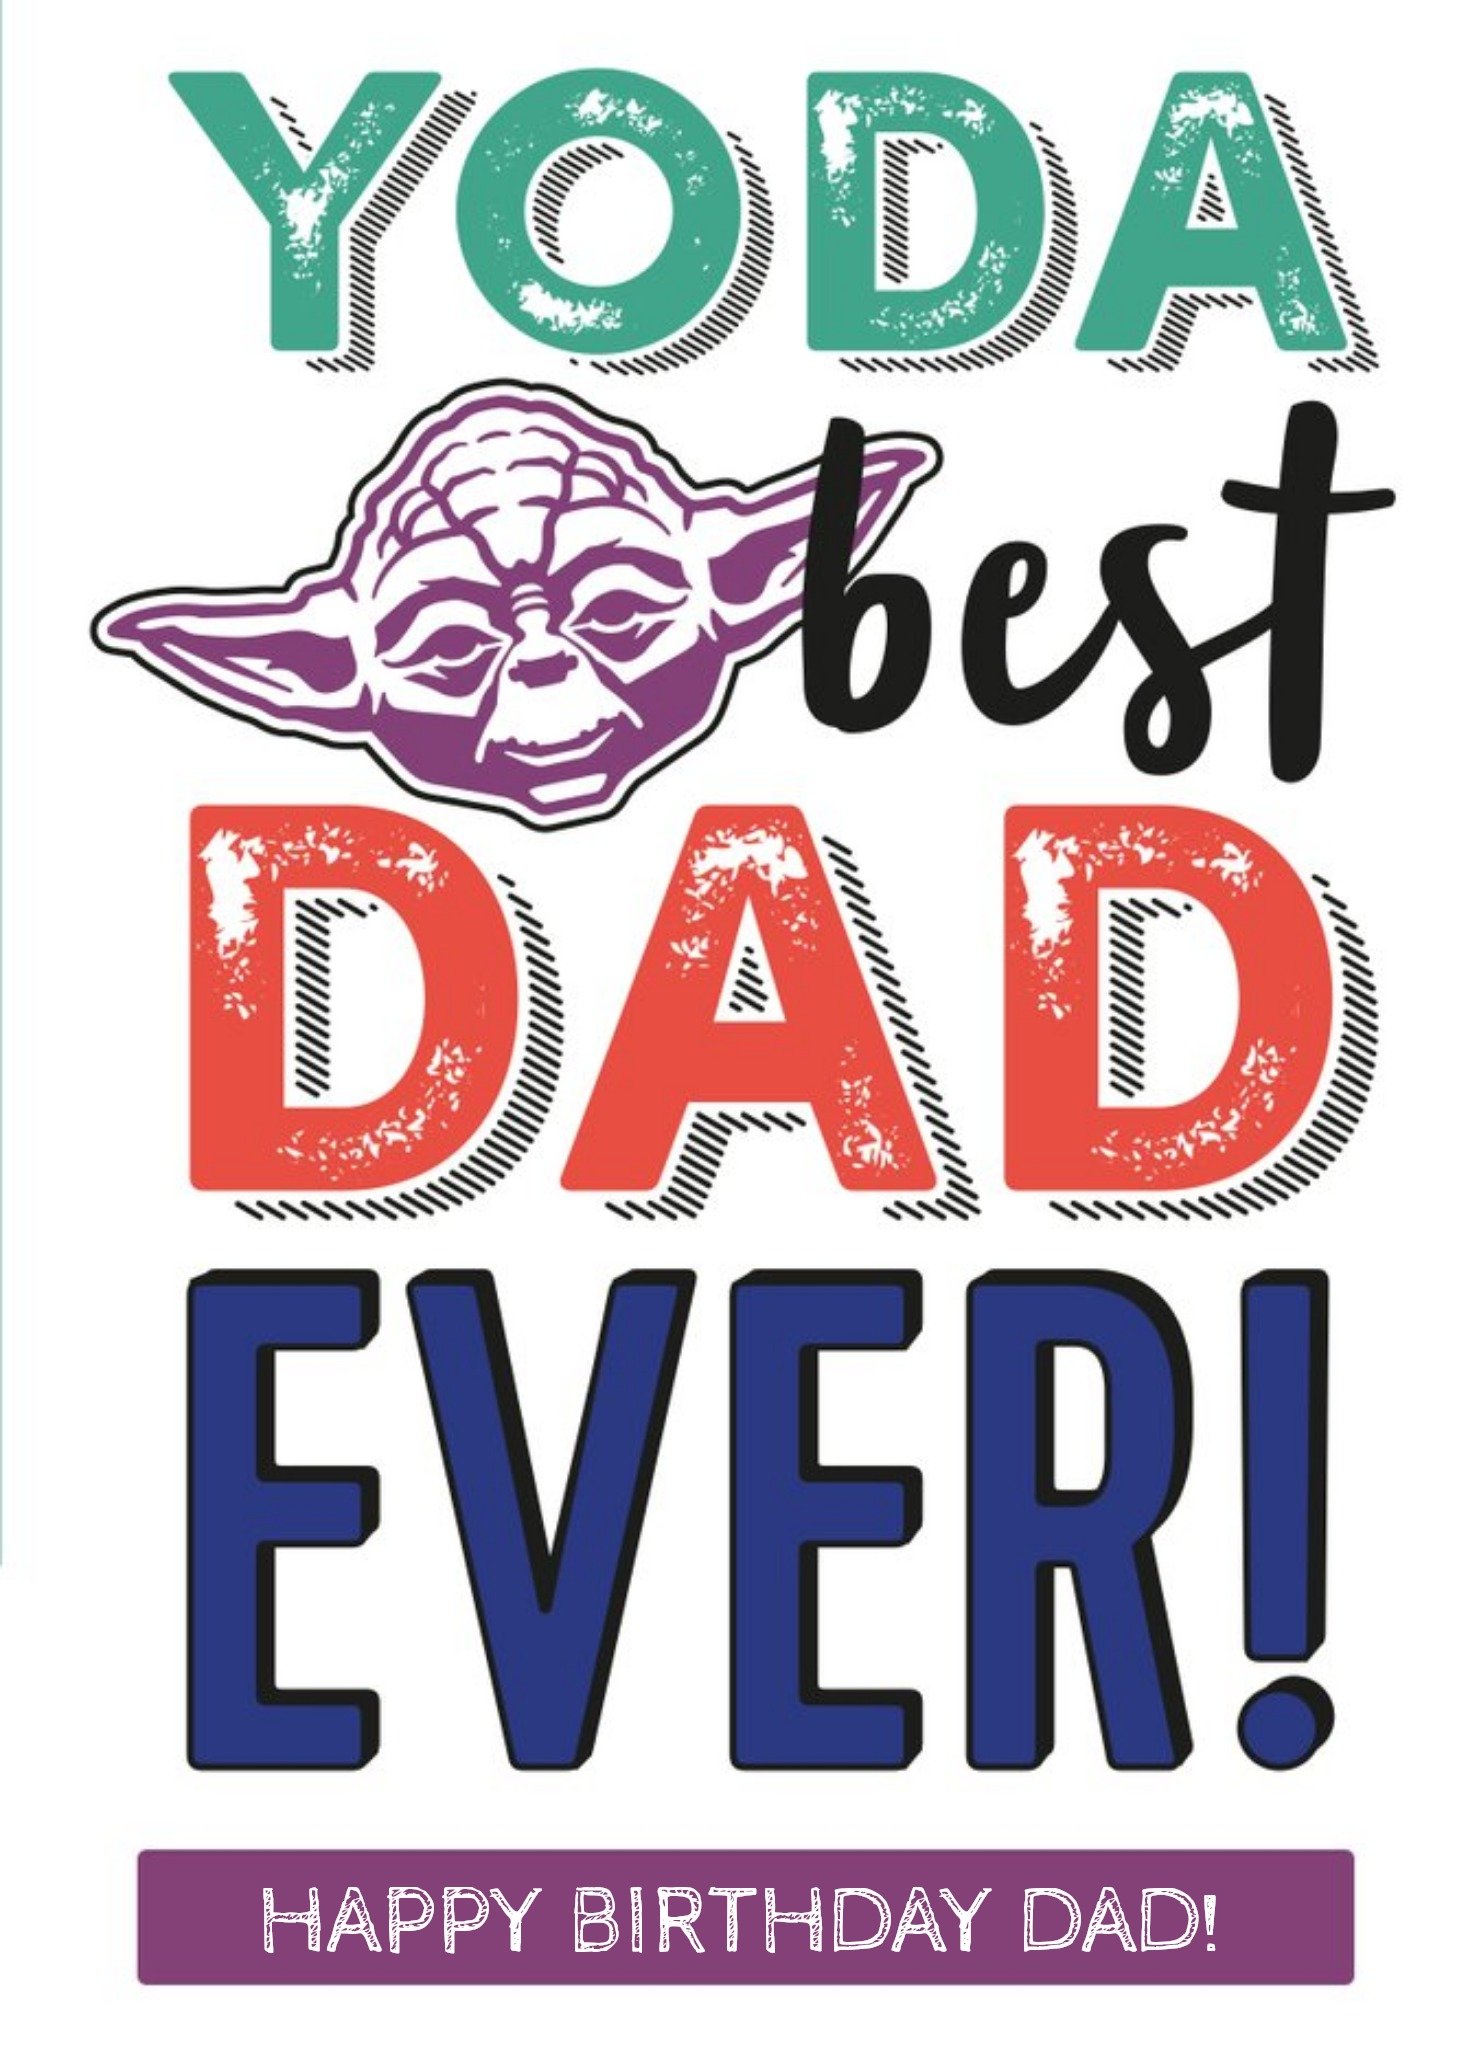 Dad Birthday Card - Star Wars - Yoda, Large